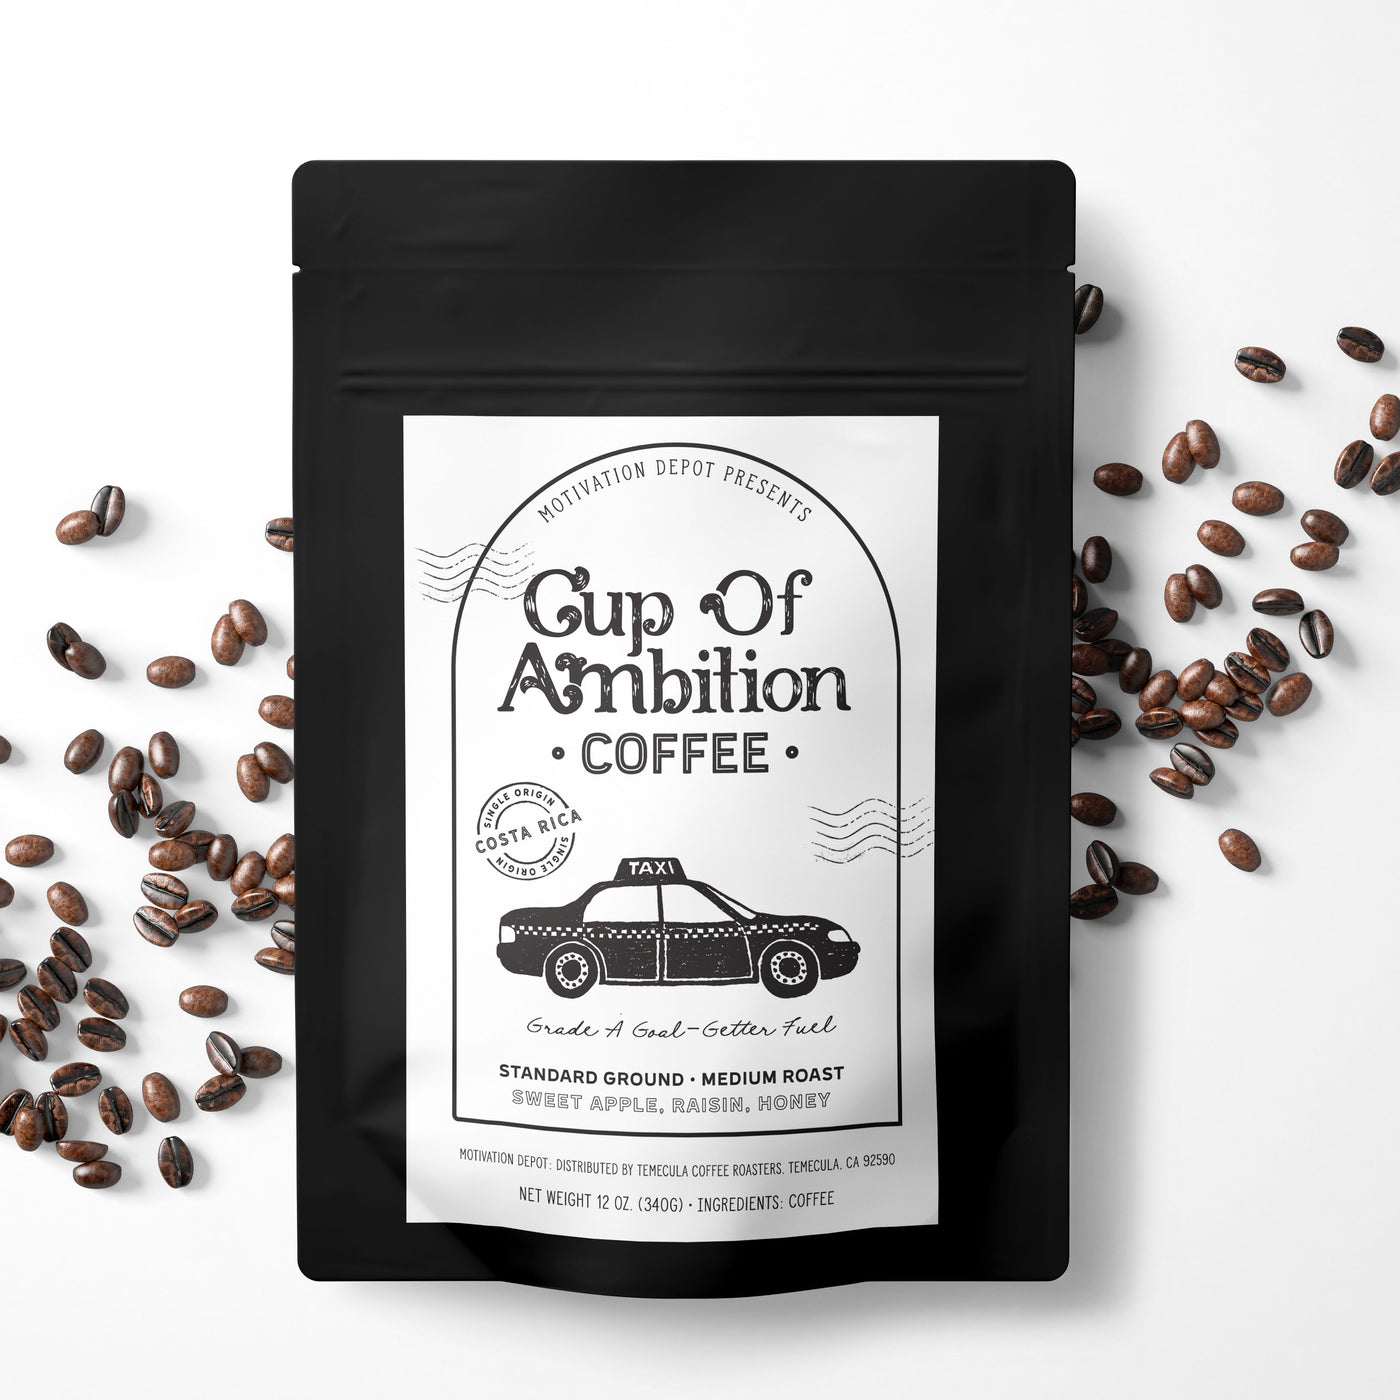 Cup of Ambition - Single Origin Costa Rican Coffee